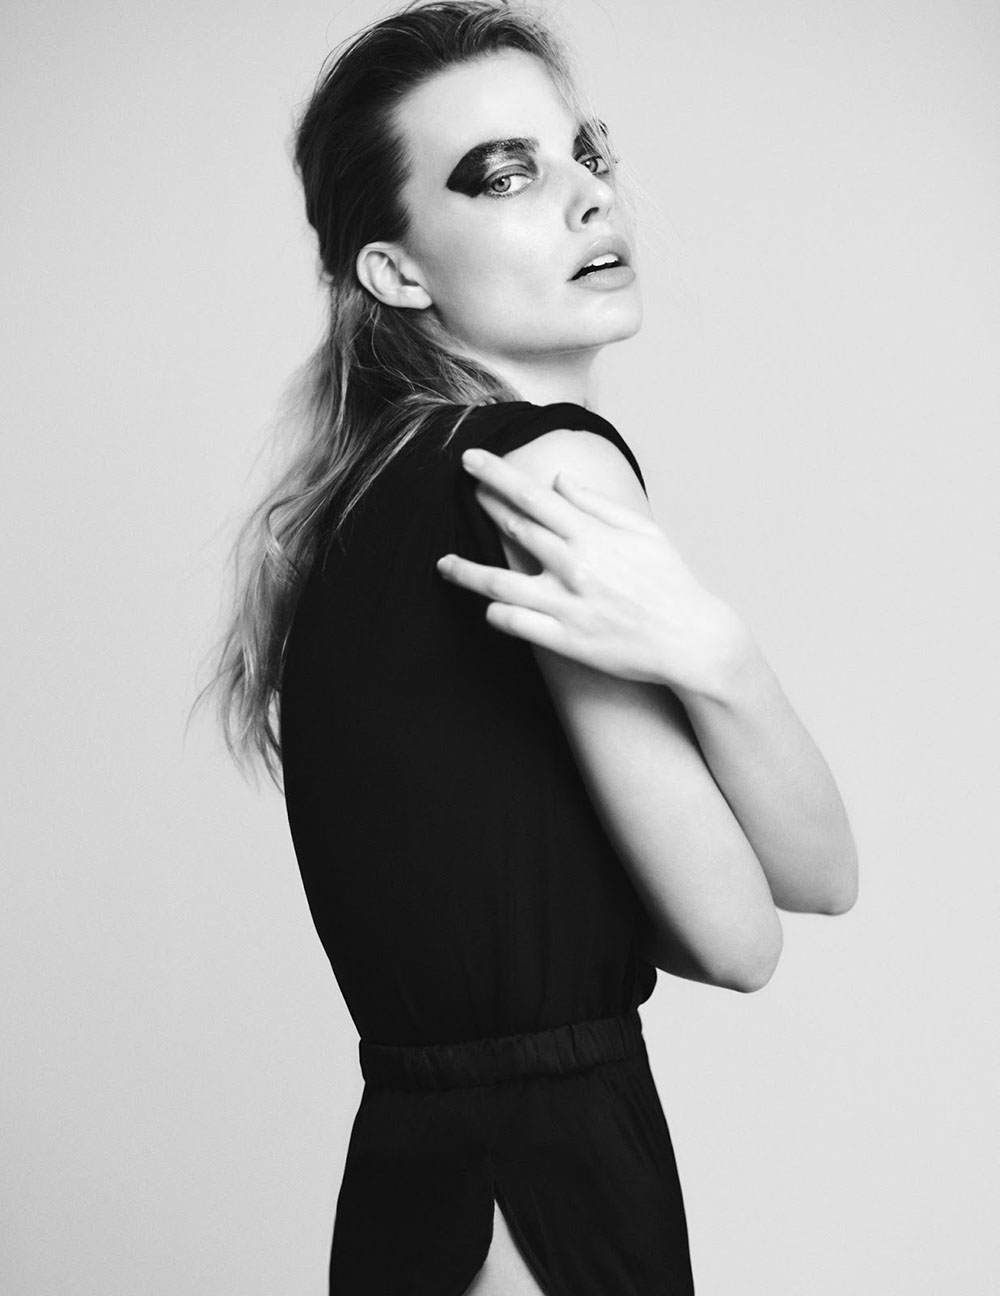 Margot Robbie covers V Magazine Spring 2020 by Chris Colls